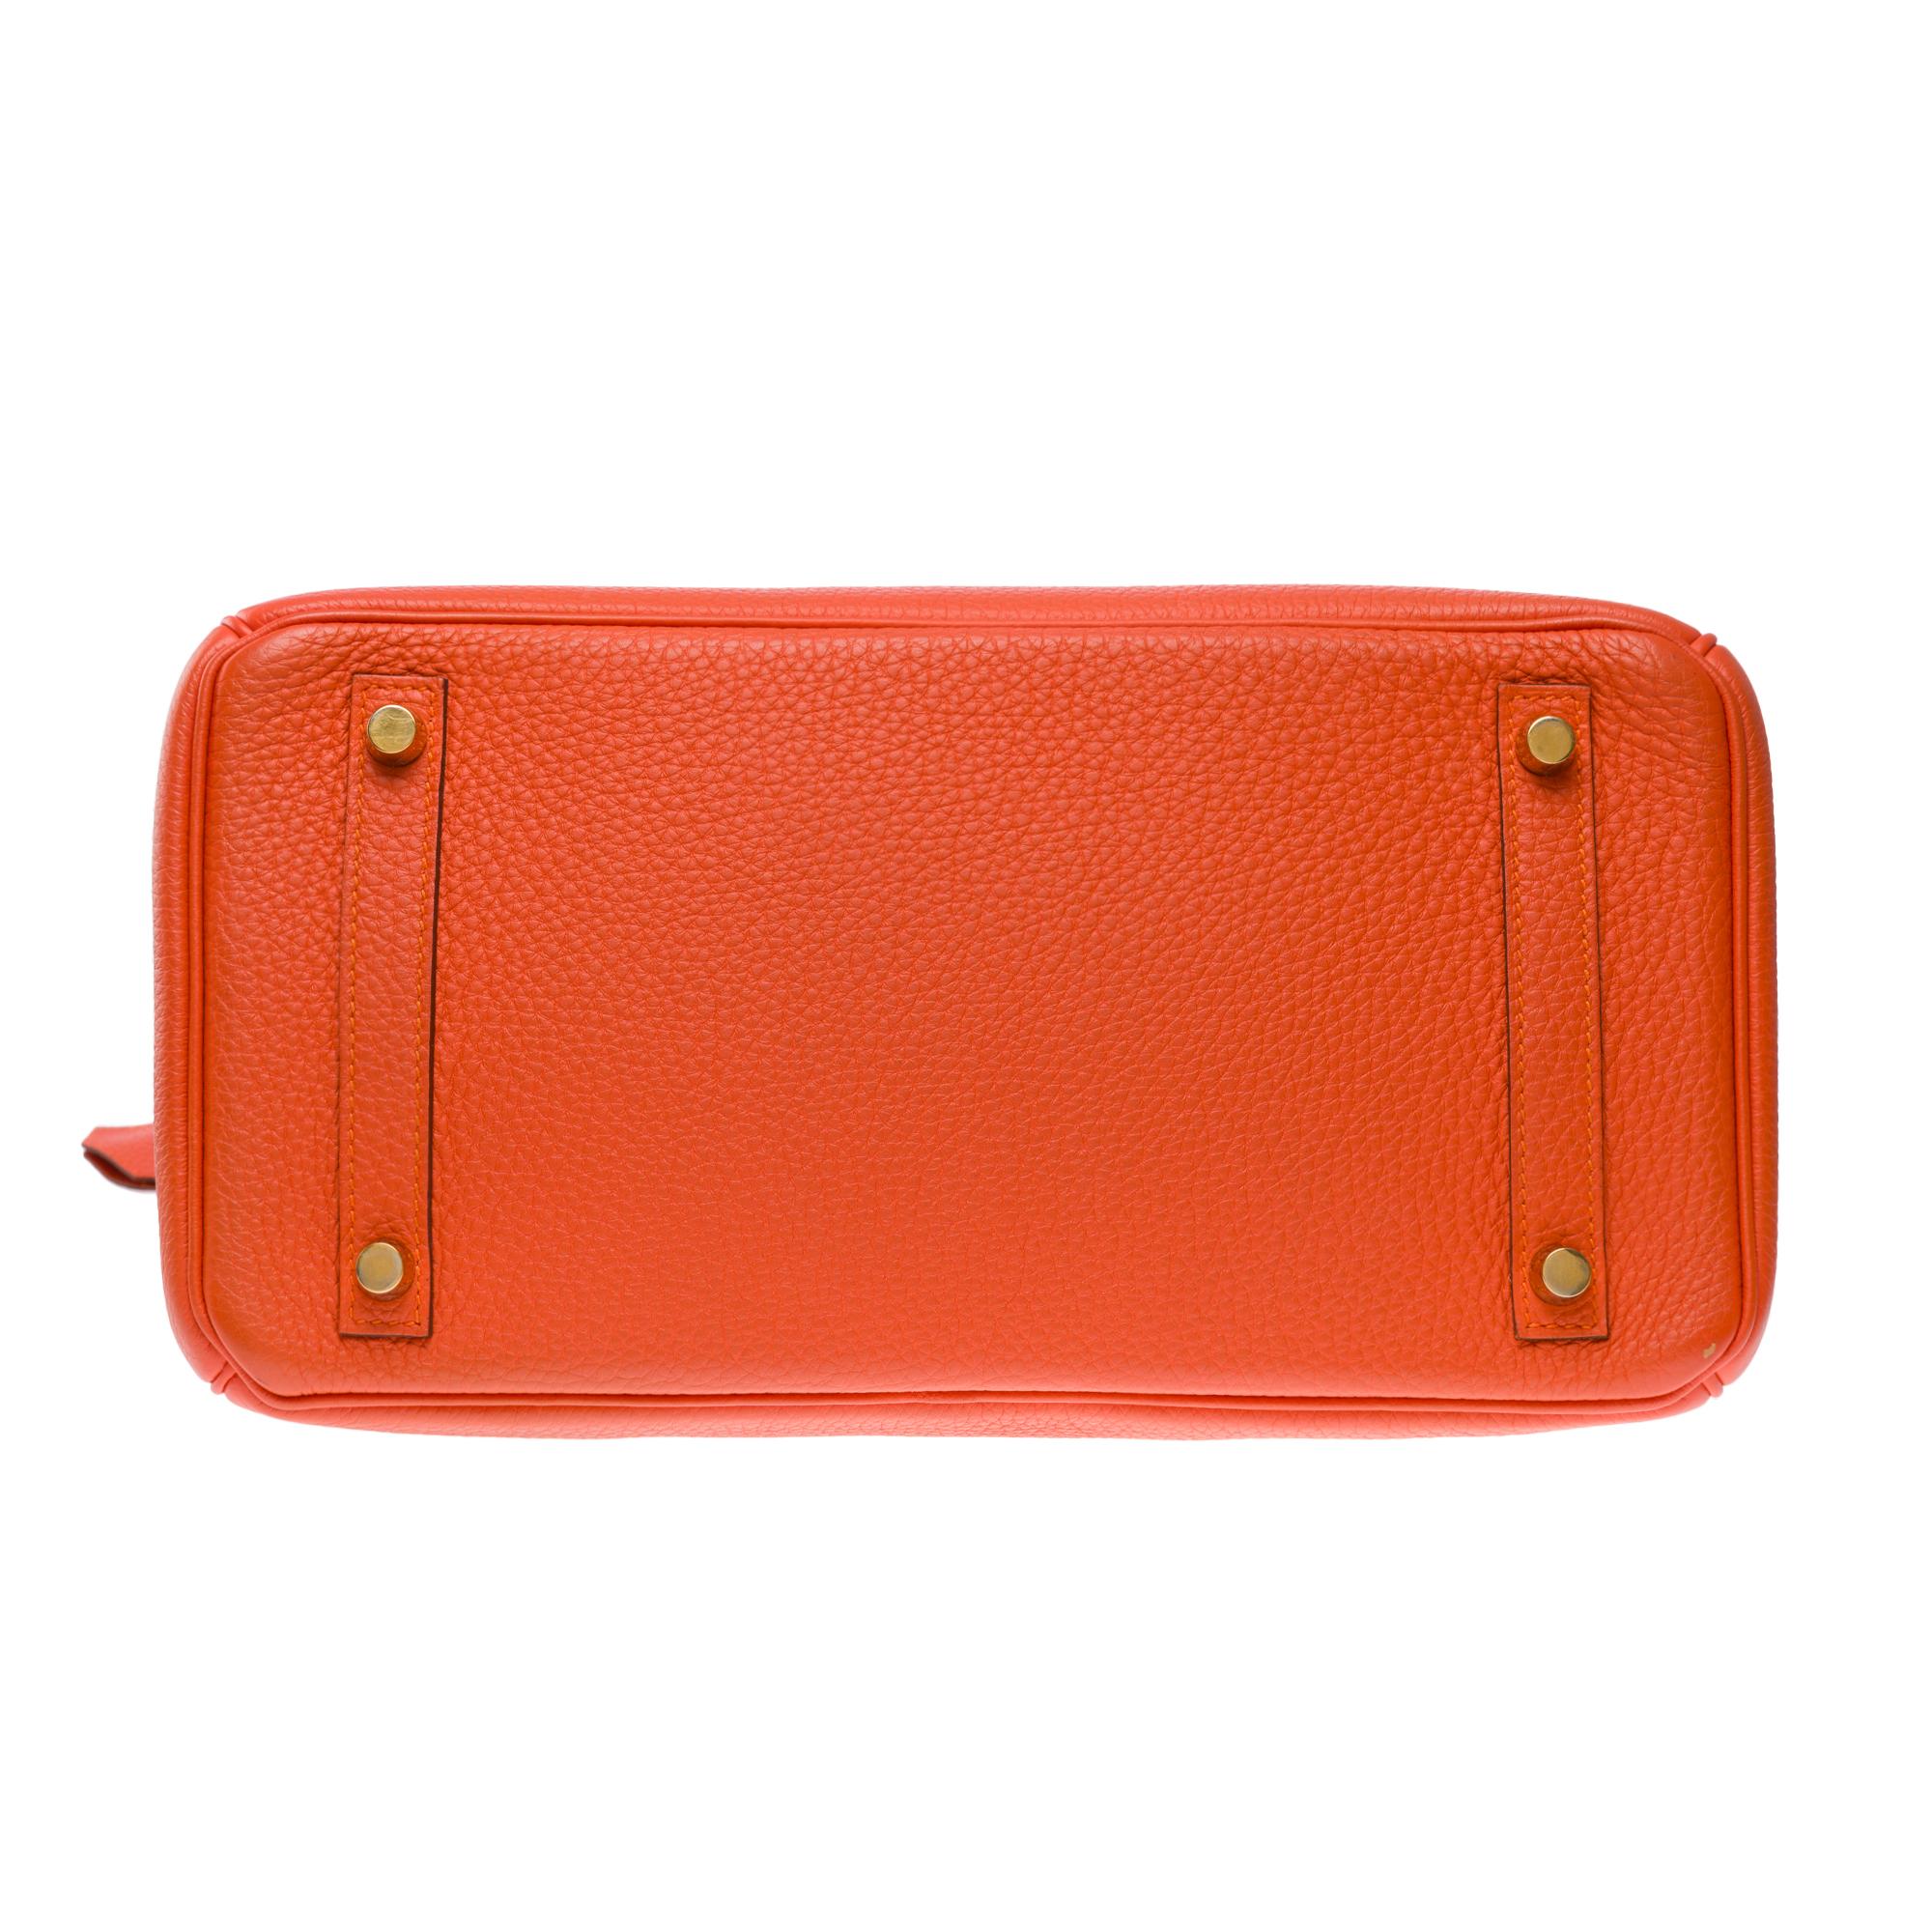 Superb Hermes Birkin 30 handbag in Taurillon Clemence Orange Poppy leather, GHW For Sale 6